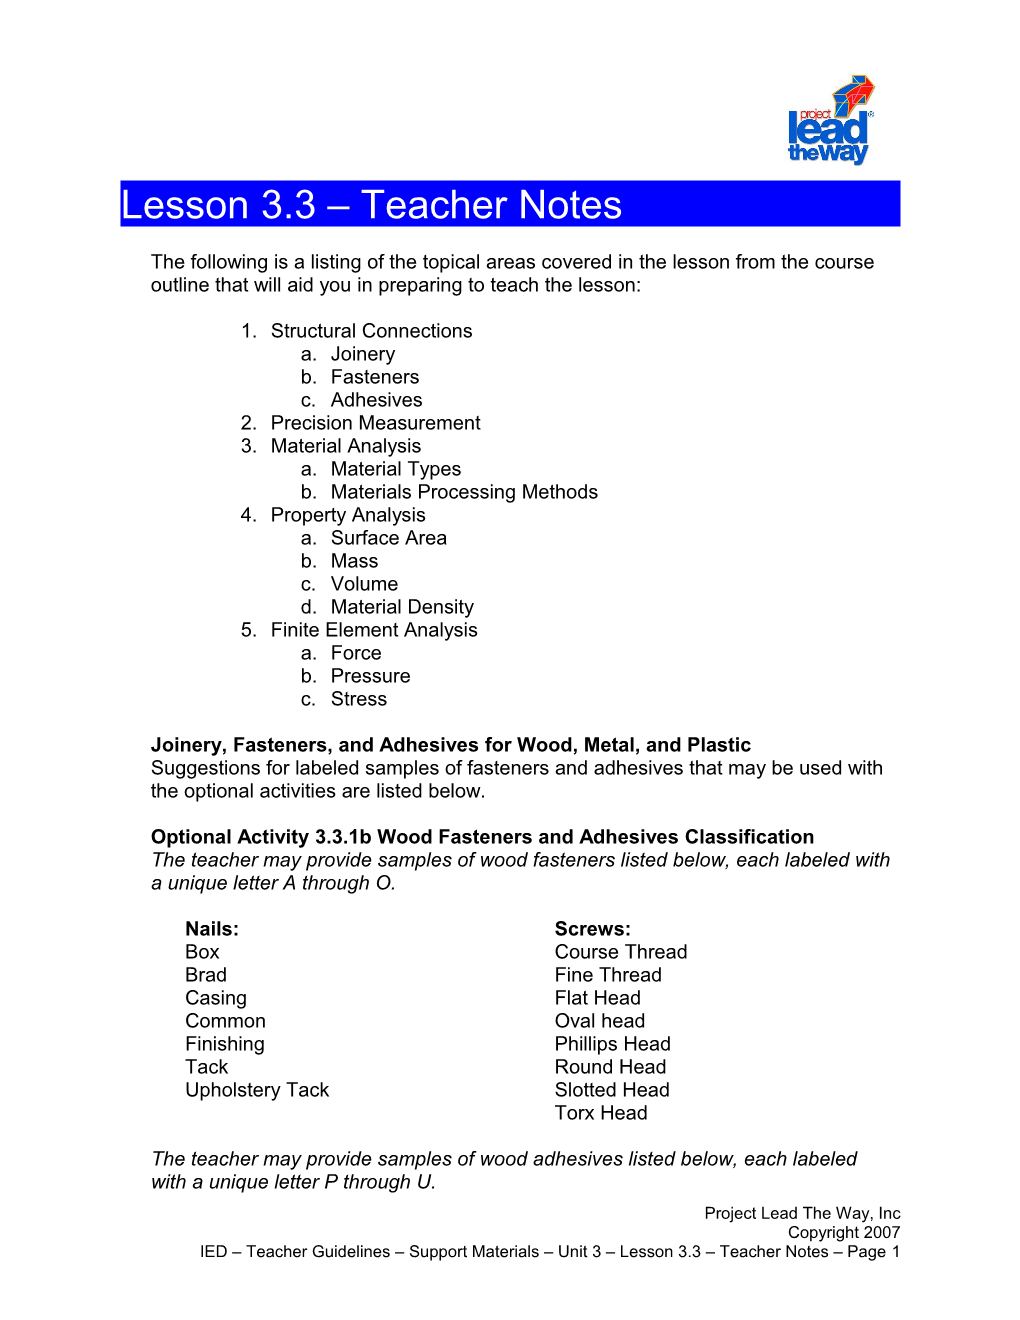 Lesson 3.3: Teacher Notes